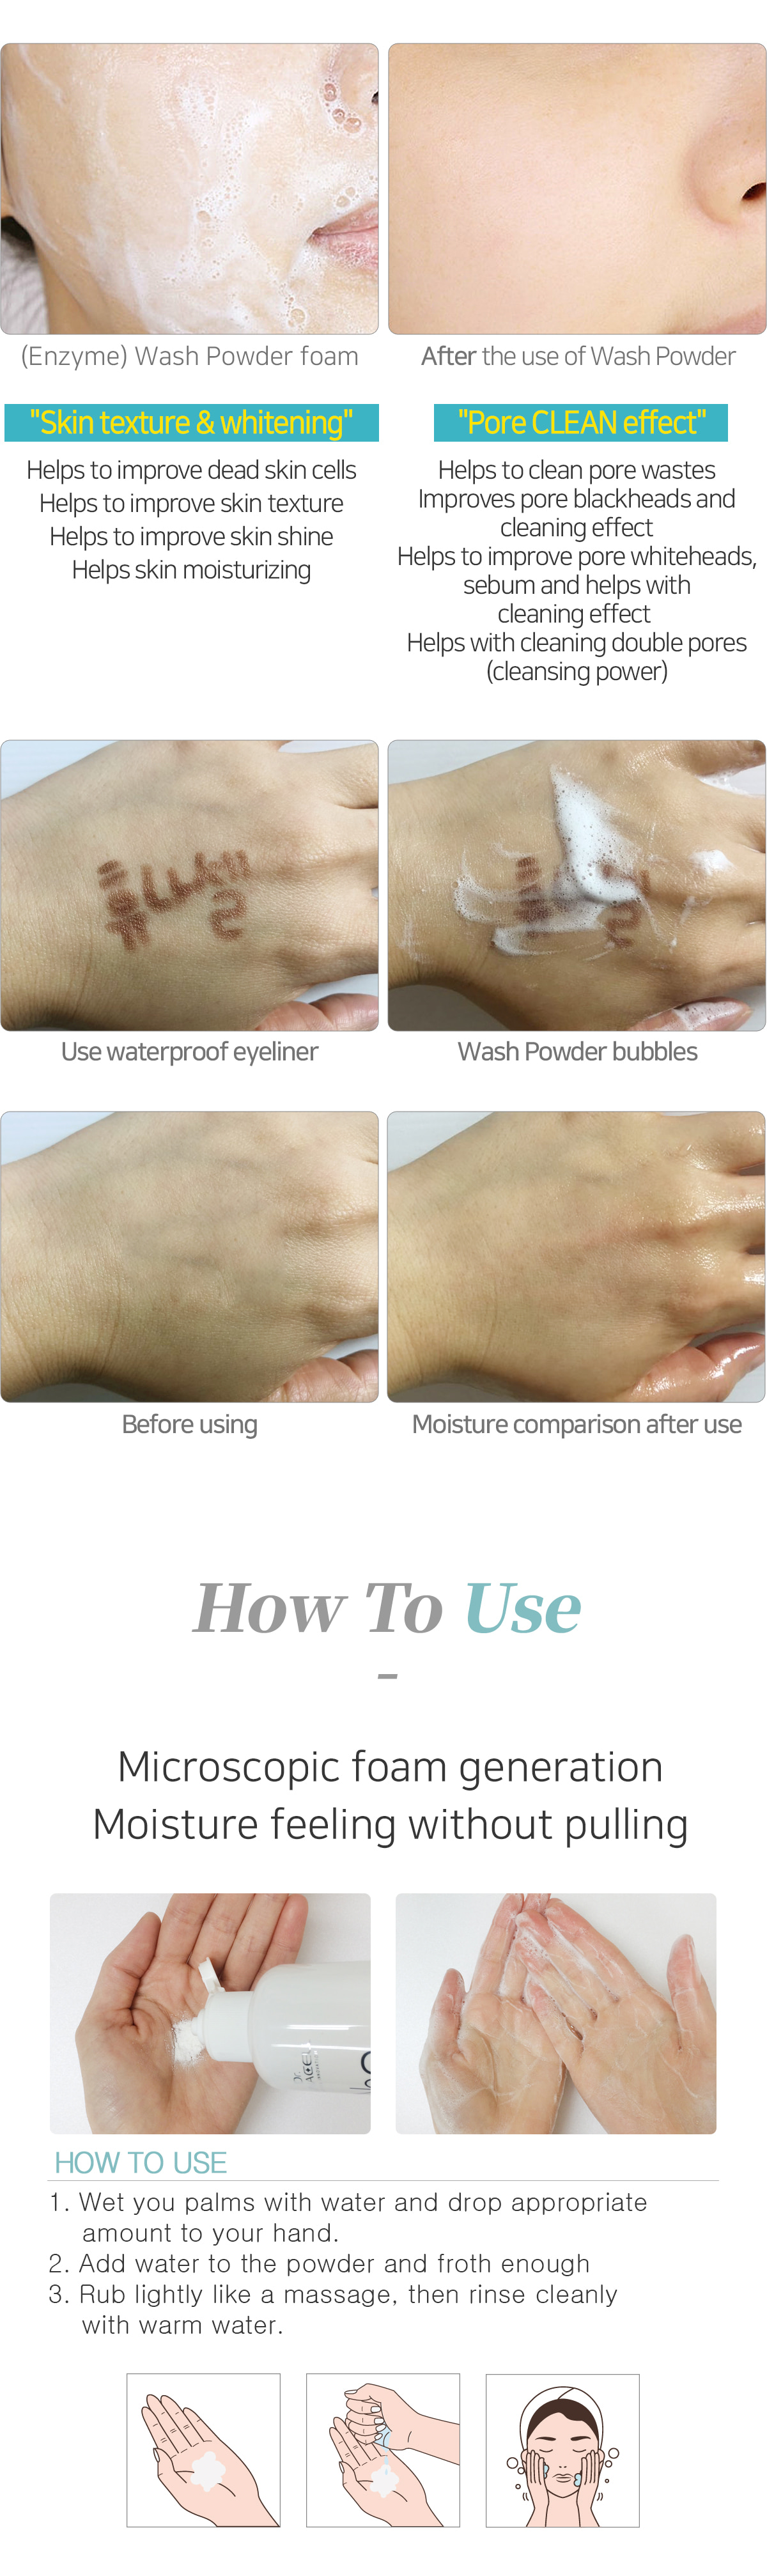 Dr.hunacell - Wash Powder (80g) X 100EA FOR B2B Skin care  Wash Powder  Moisturizing  Soothing